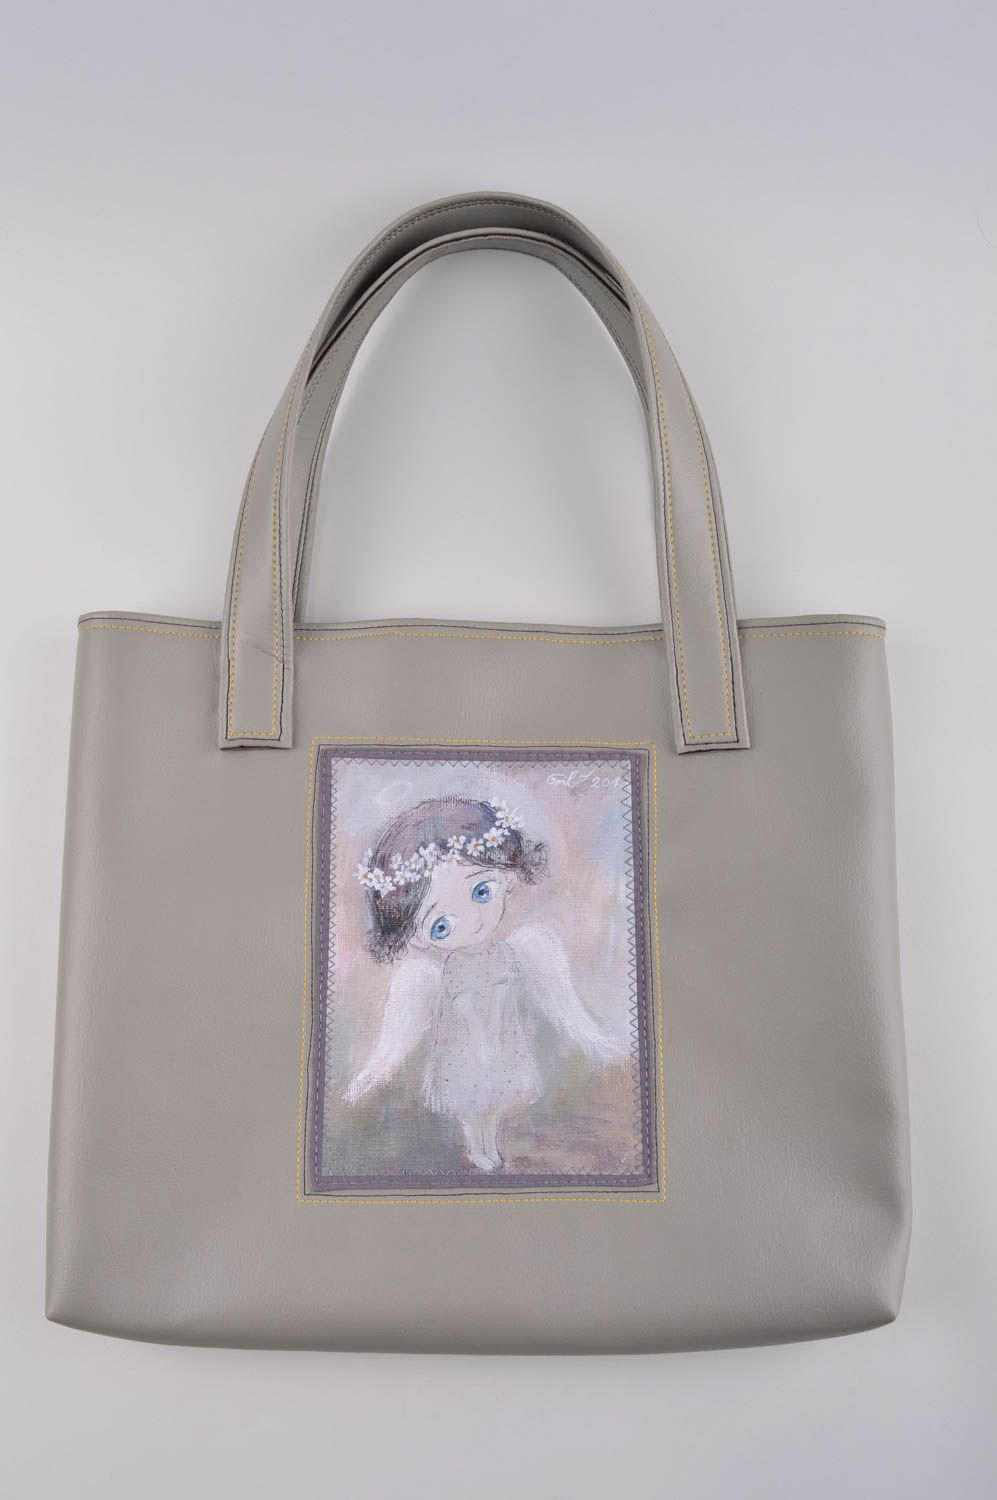 Handmade bag unusual bag designer bag faux leather bag gift for women photo 1